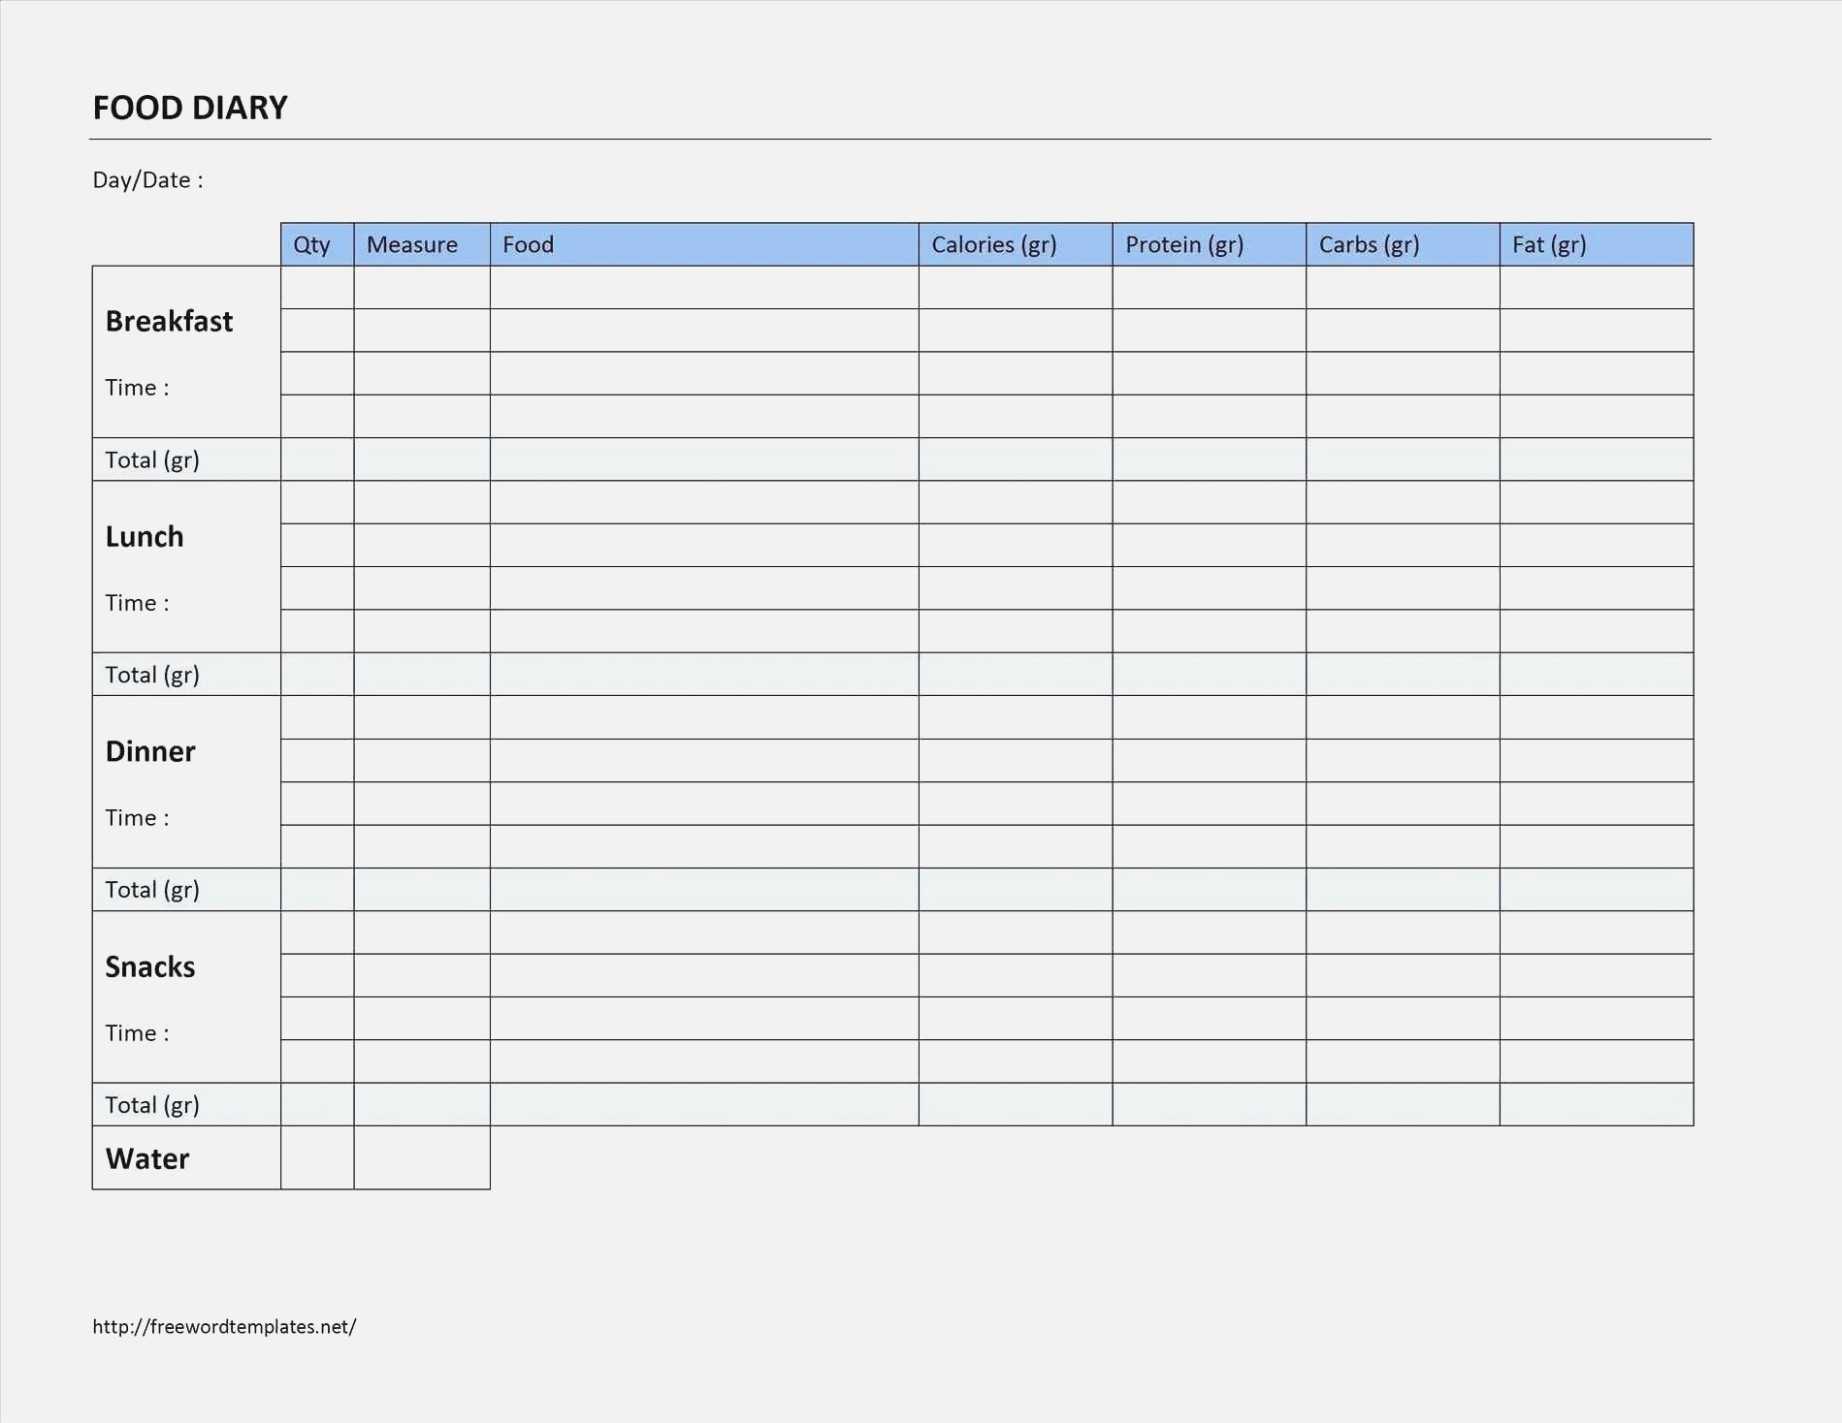 Free Baseball Stats Et Sheet Excel Best Of Tryout Evaluation Regarding Blank Evaluation Form Template